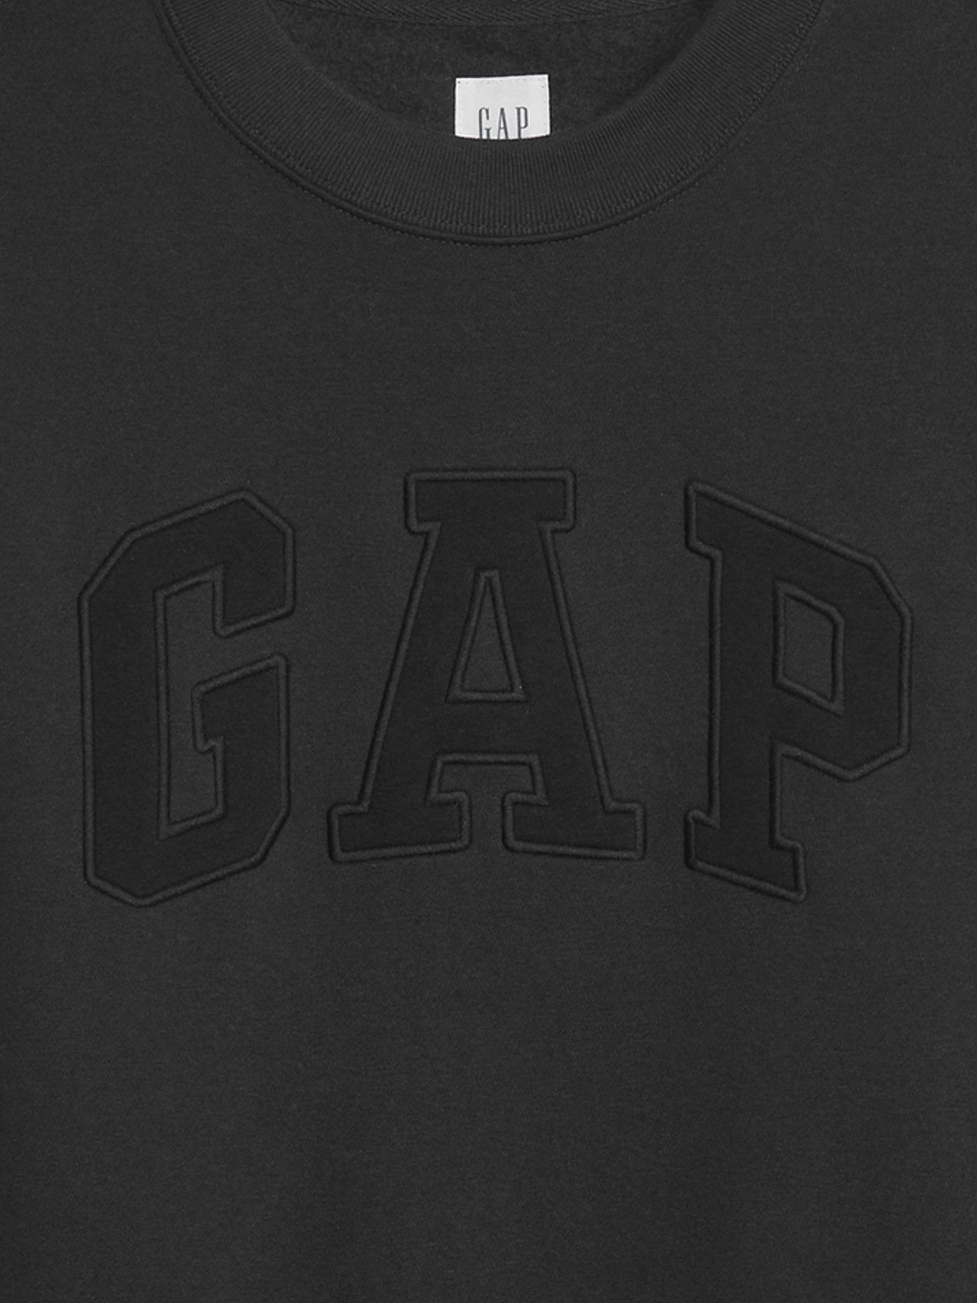 Relaxed Gap Logo Sweatshirt | Gap Factory